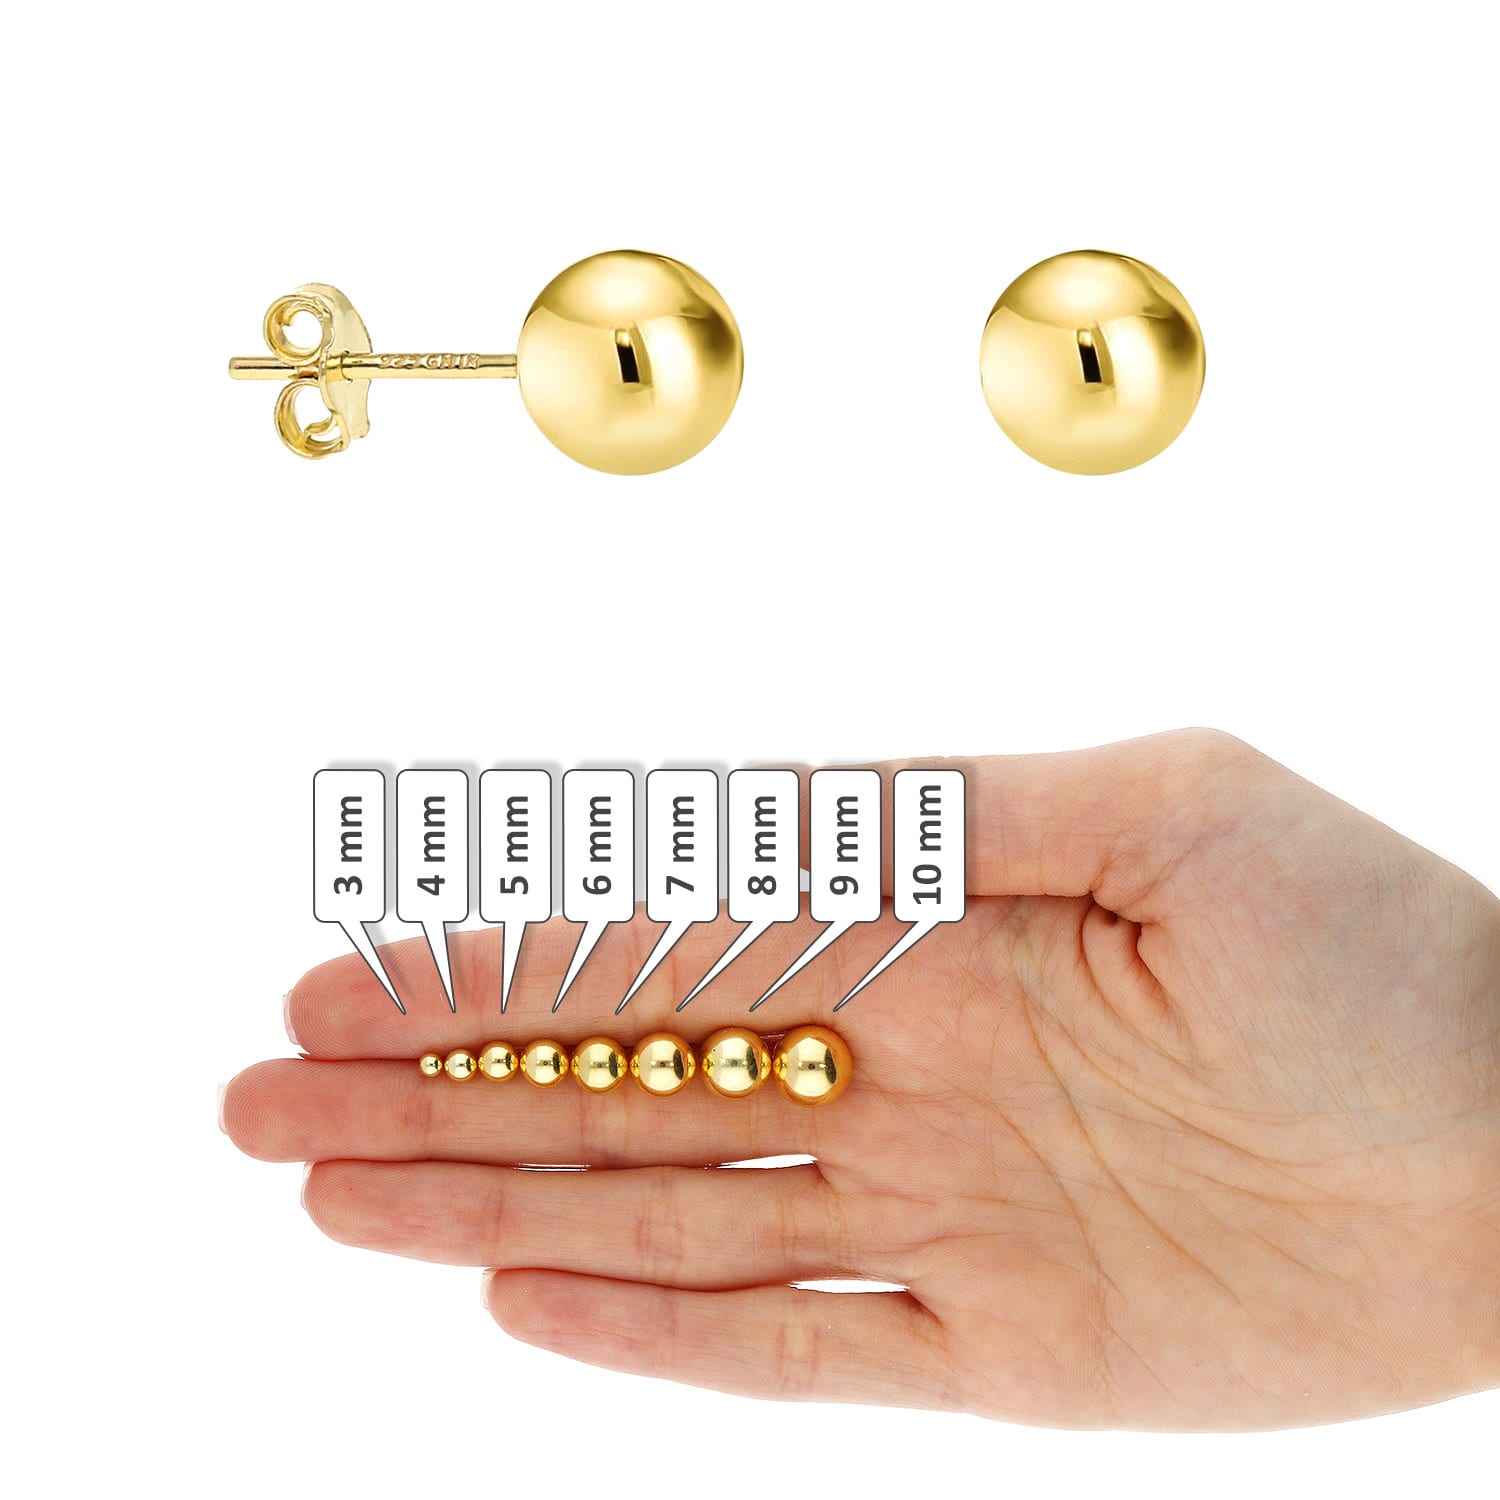 14k Yellow Gold Ball Stud Earrings (4 - 10mm)